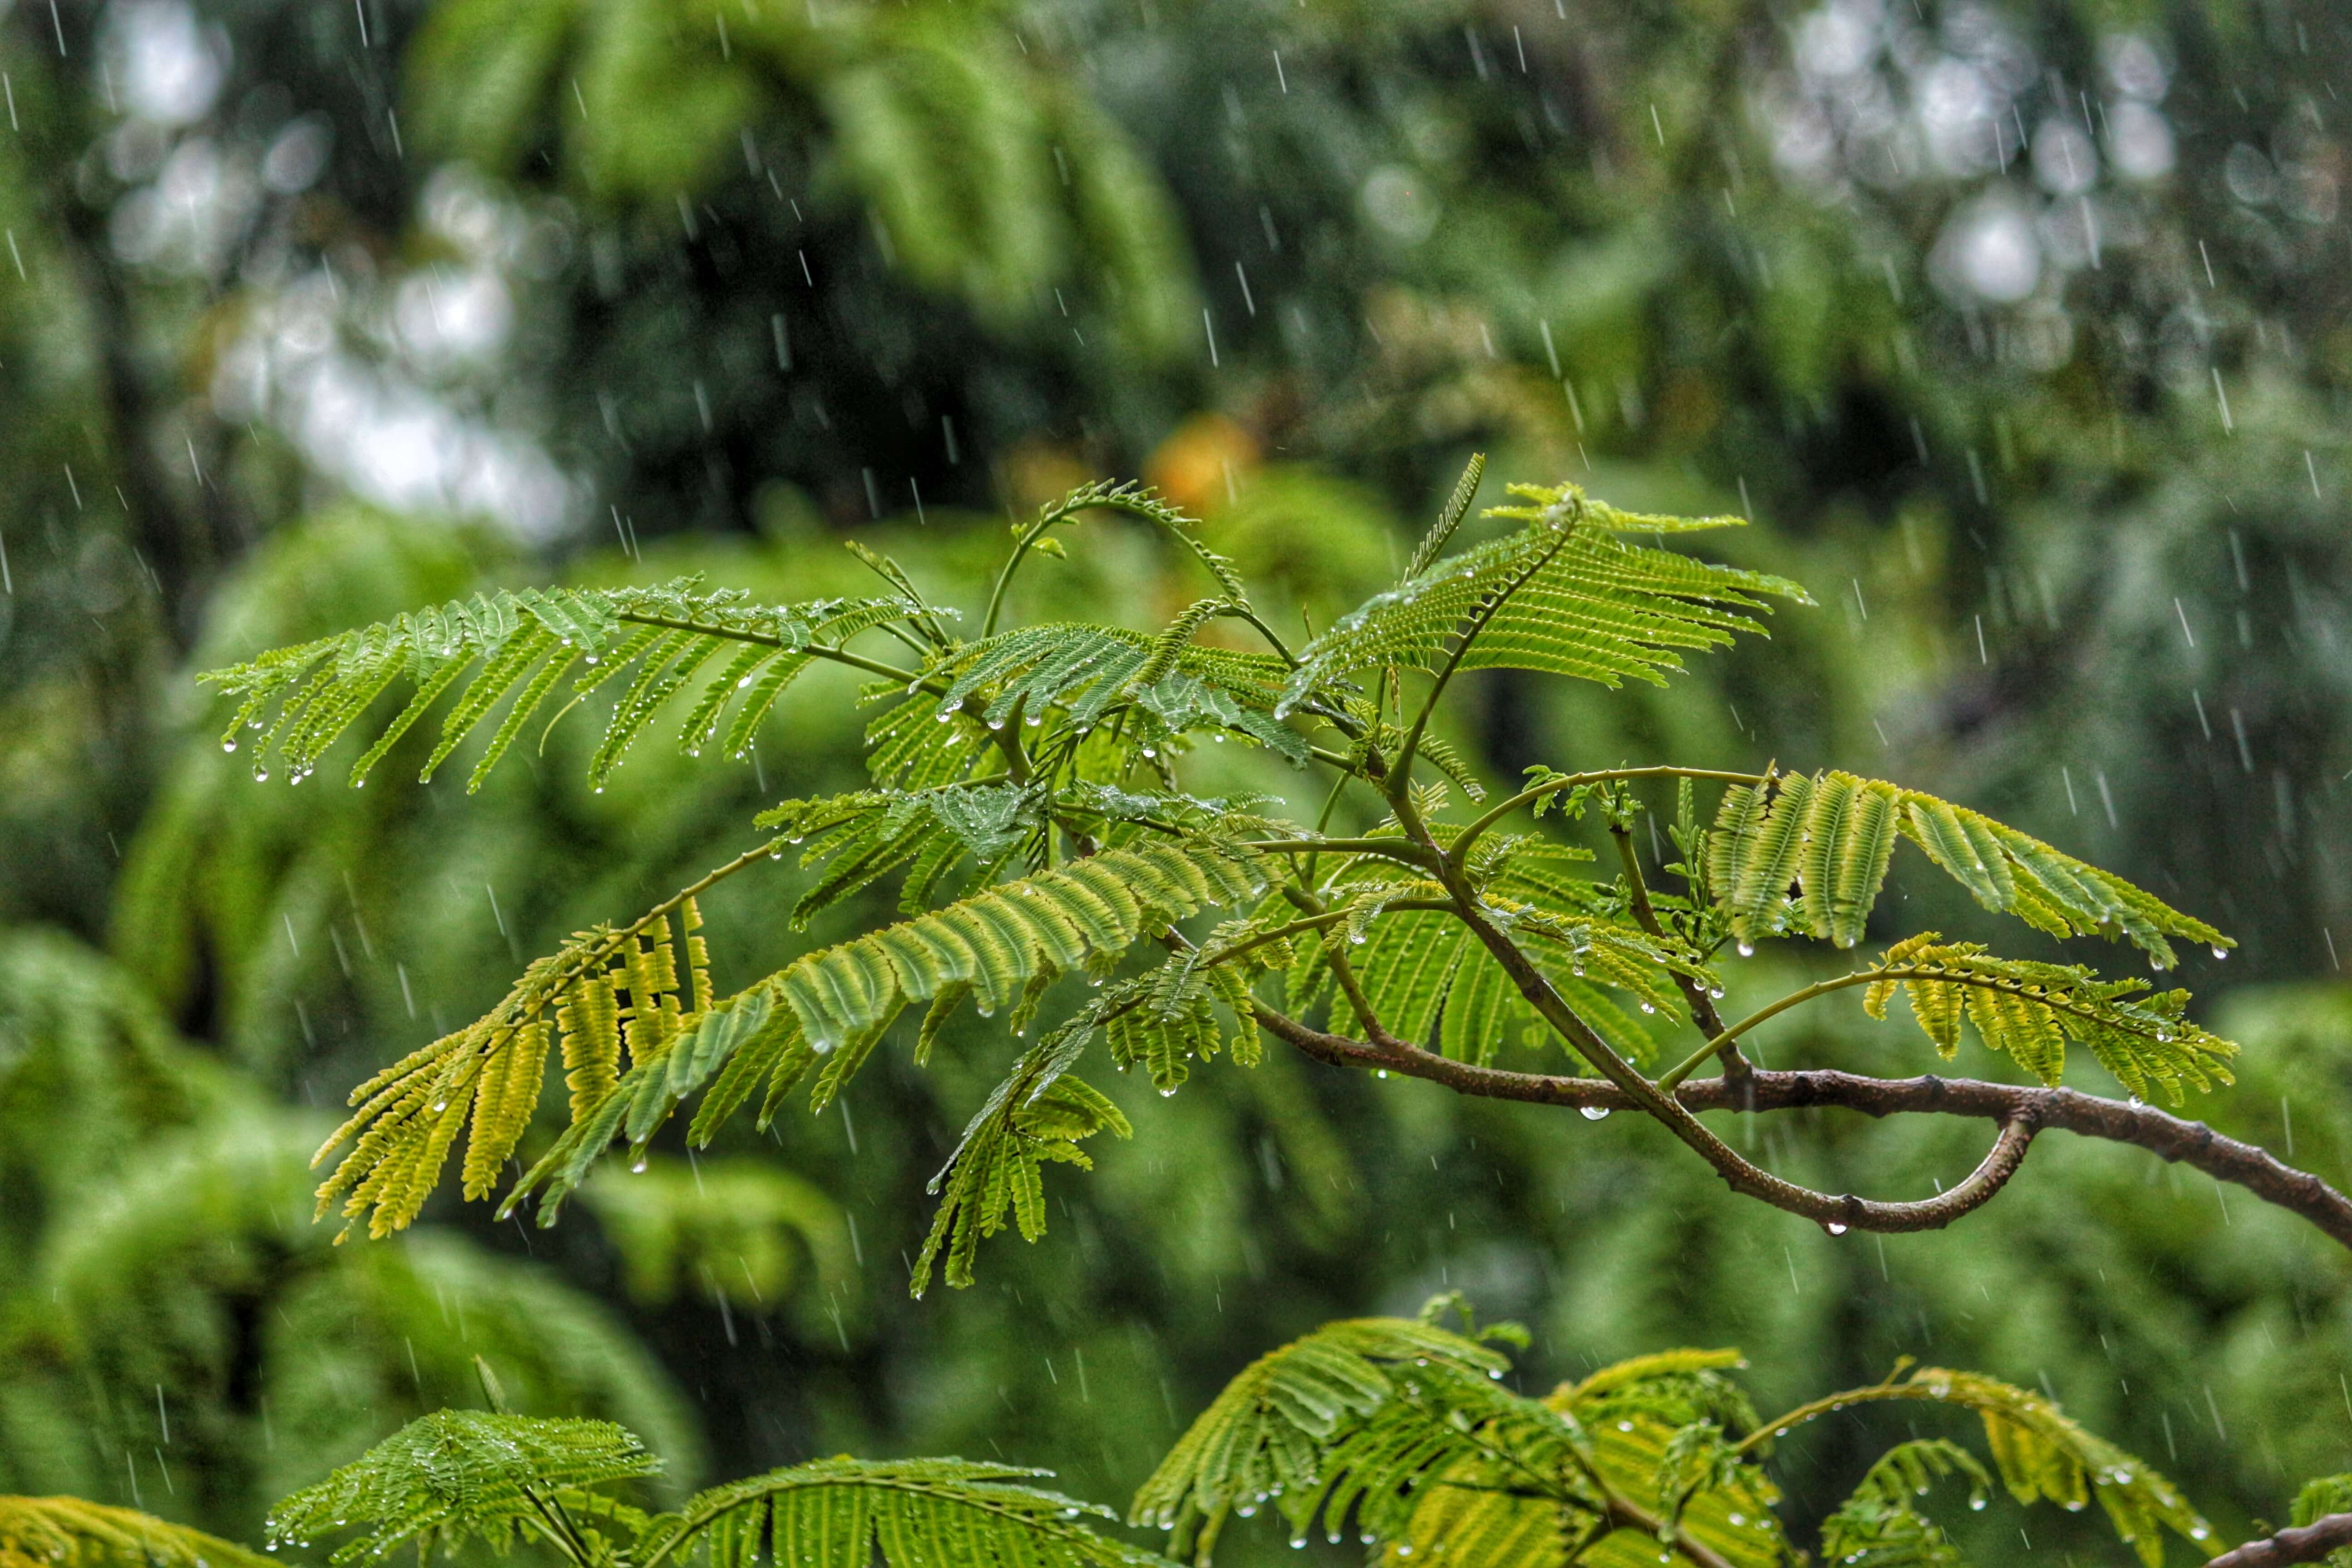 Rain falling on plant image.